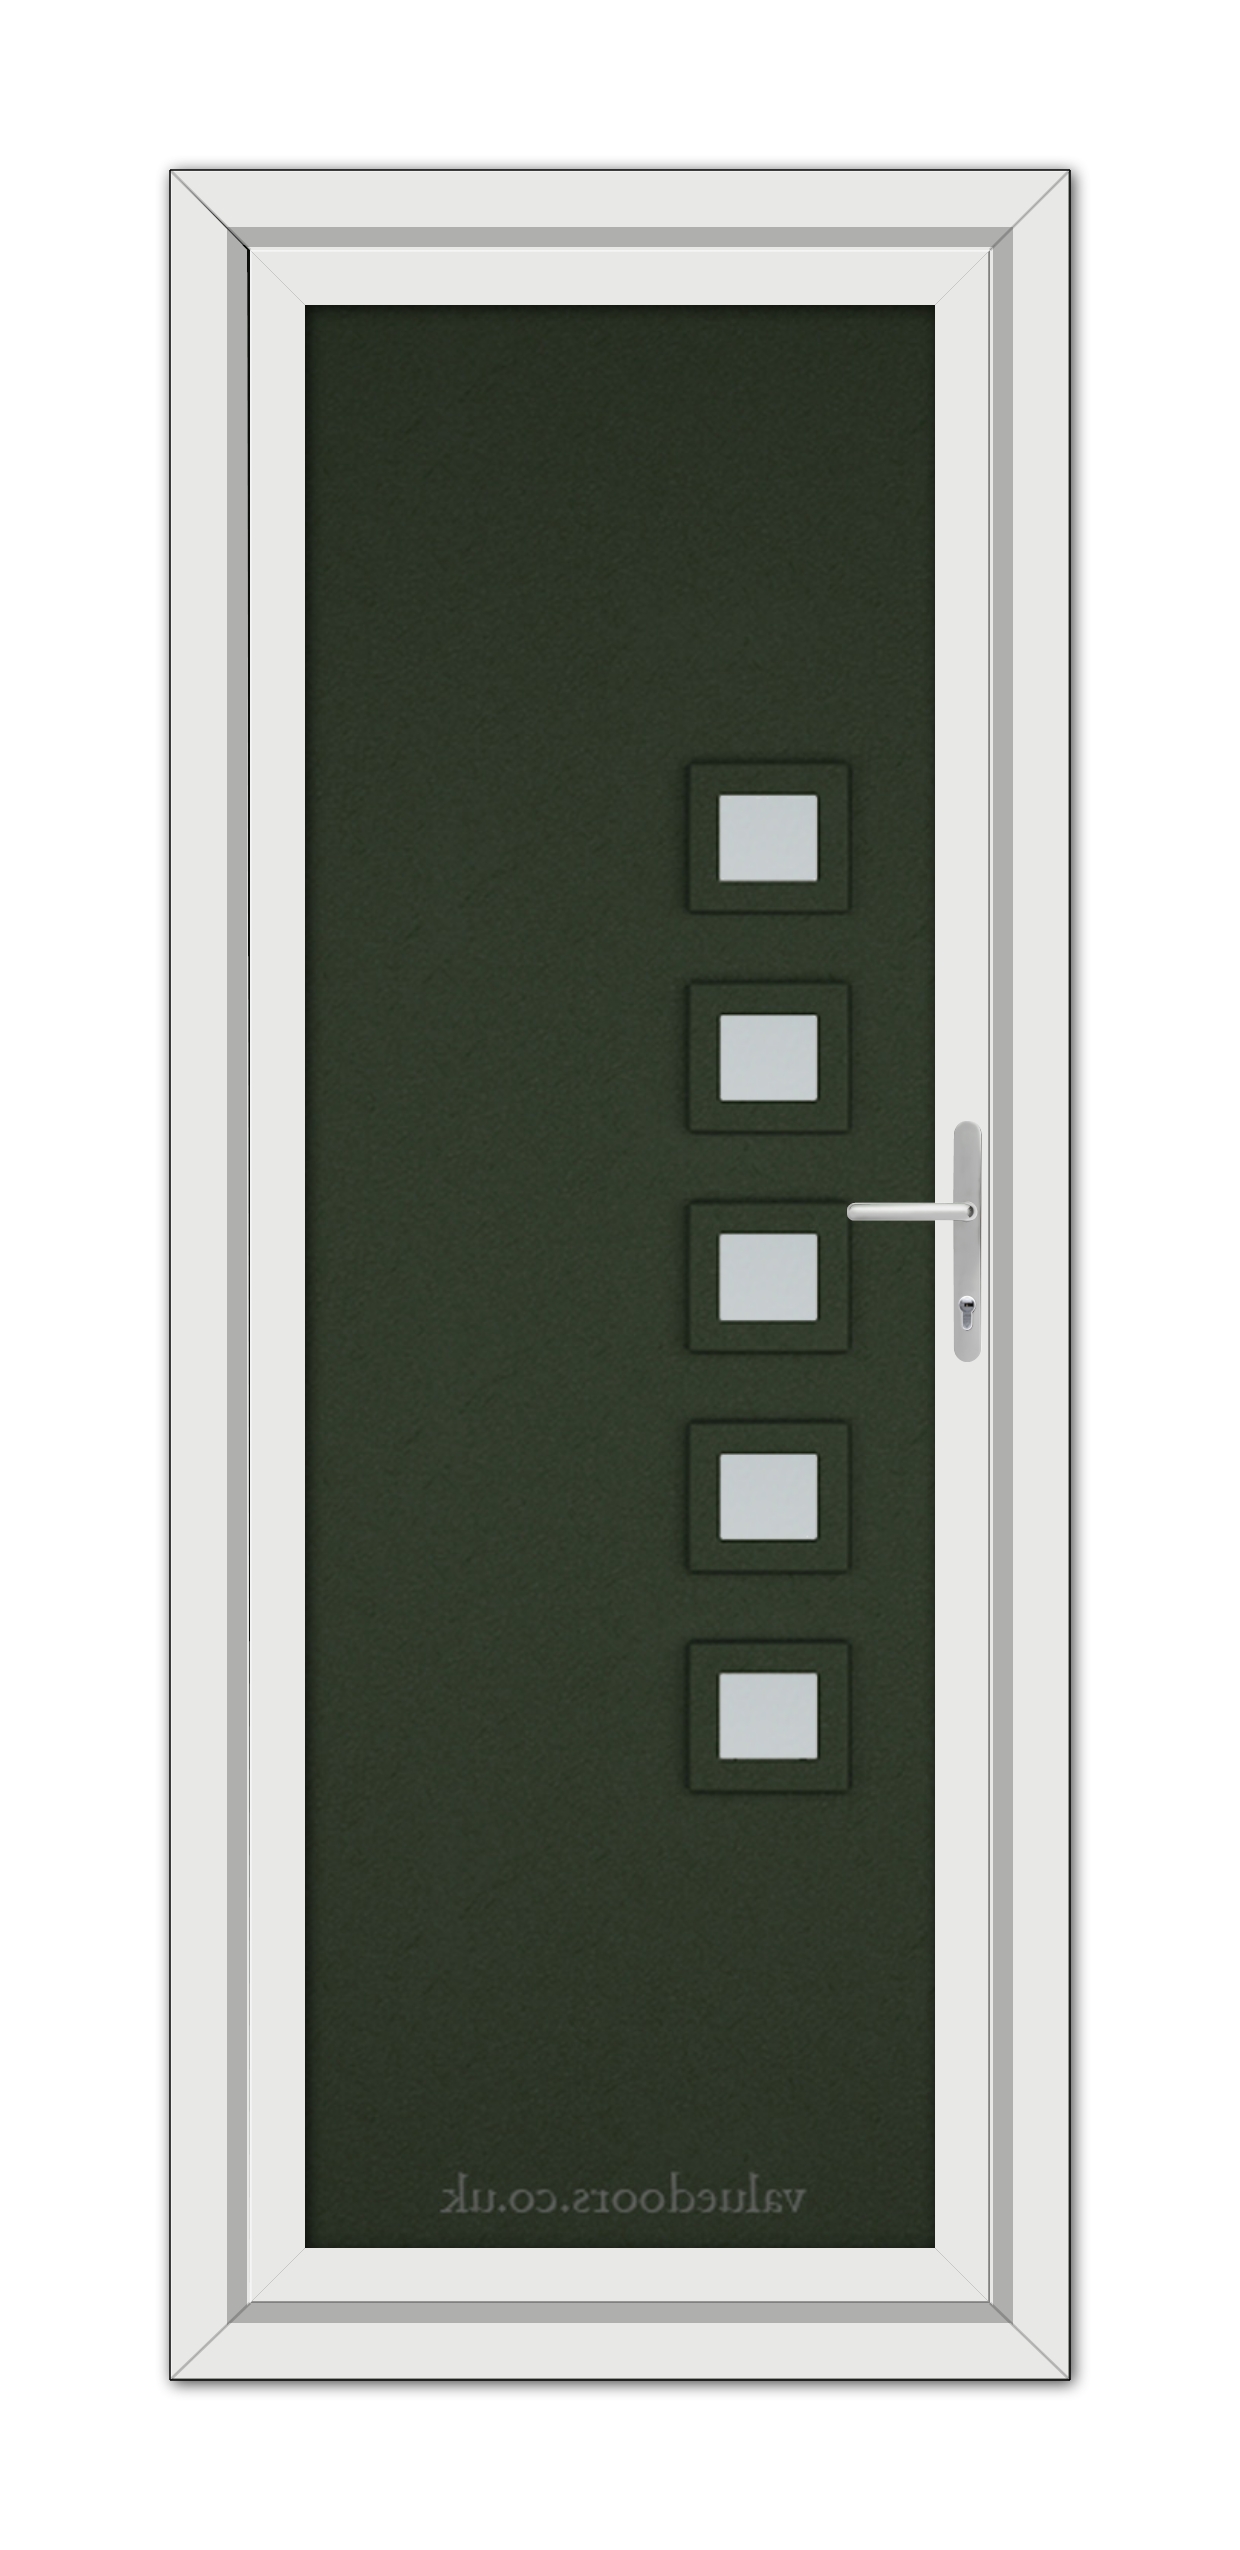 A close-up of a Green Malaga uPVC Door.